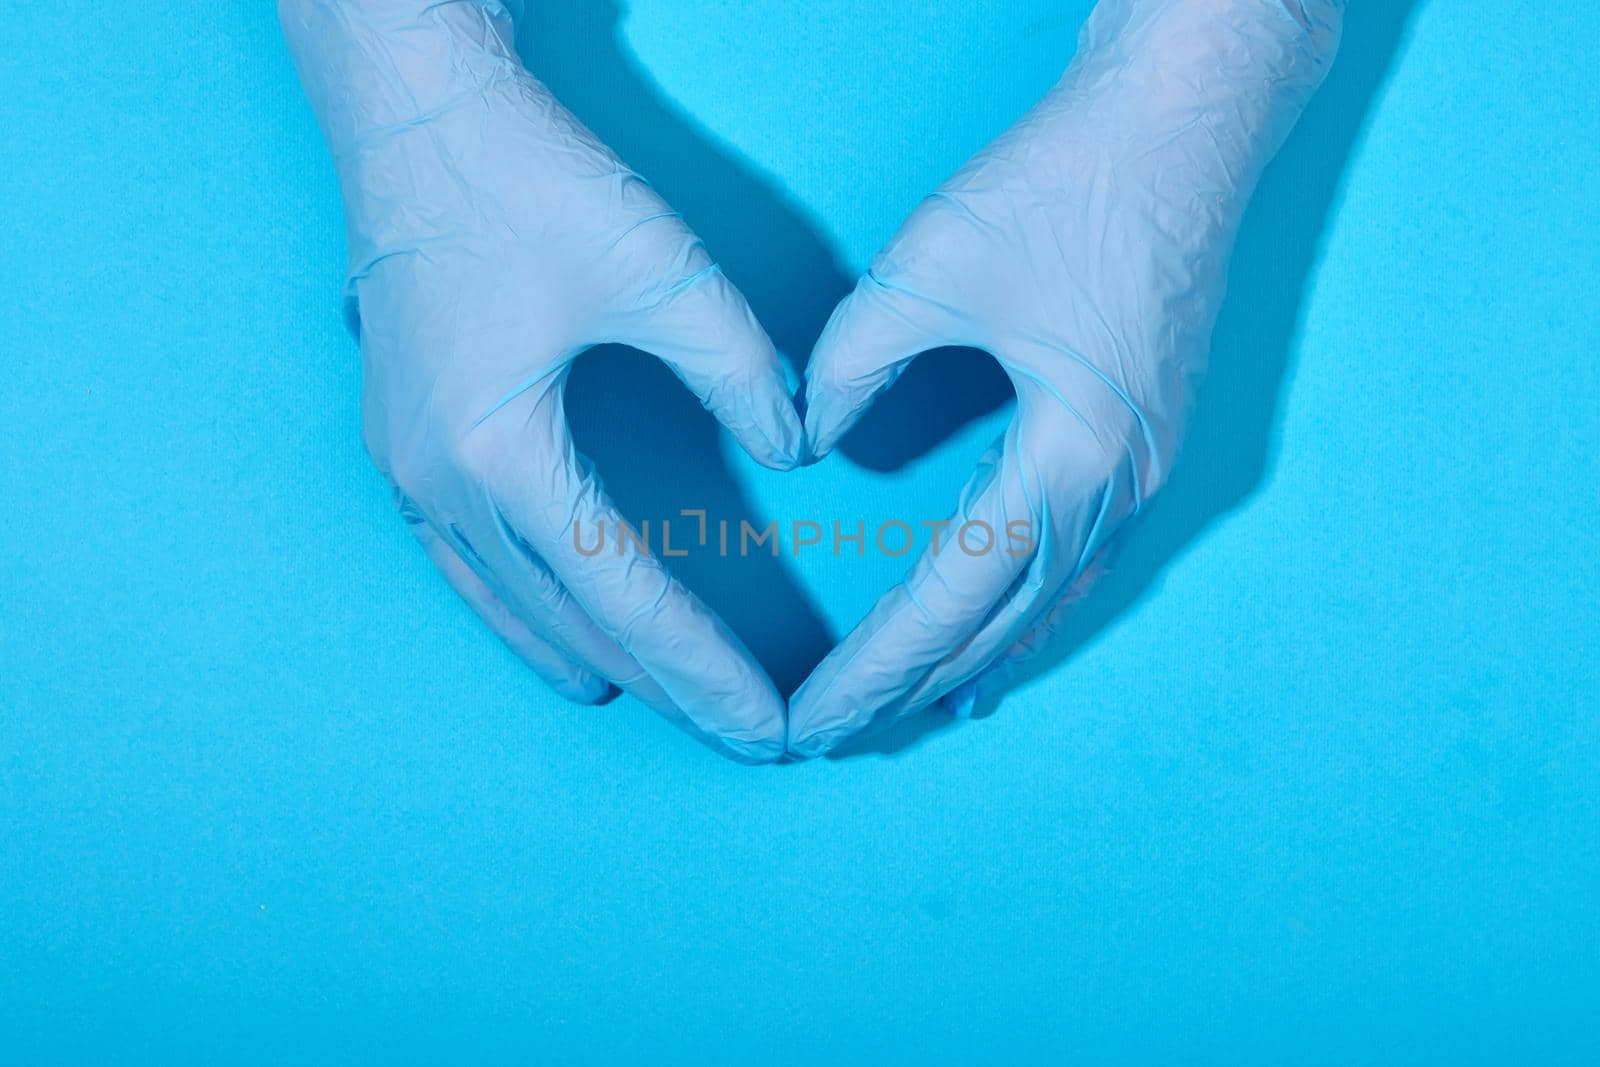 Doctors hands in medical gloves in shape heart blue background by Demkat